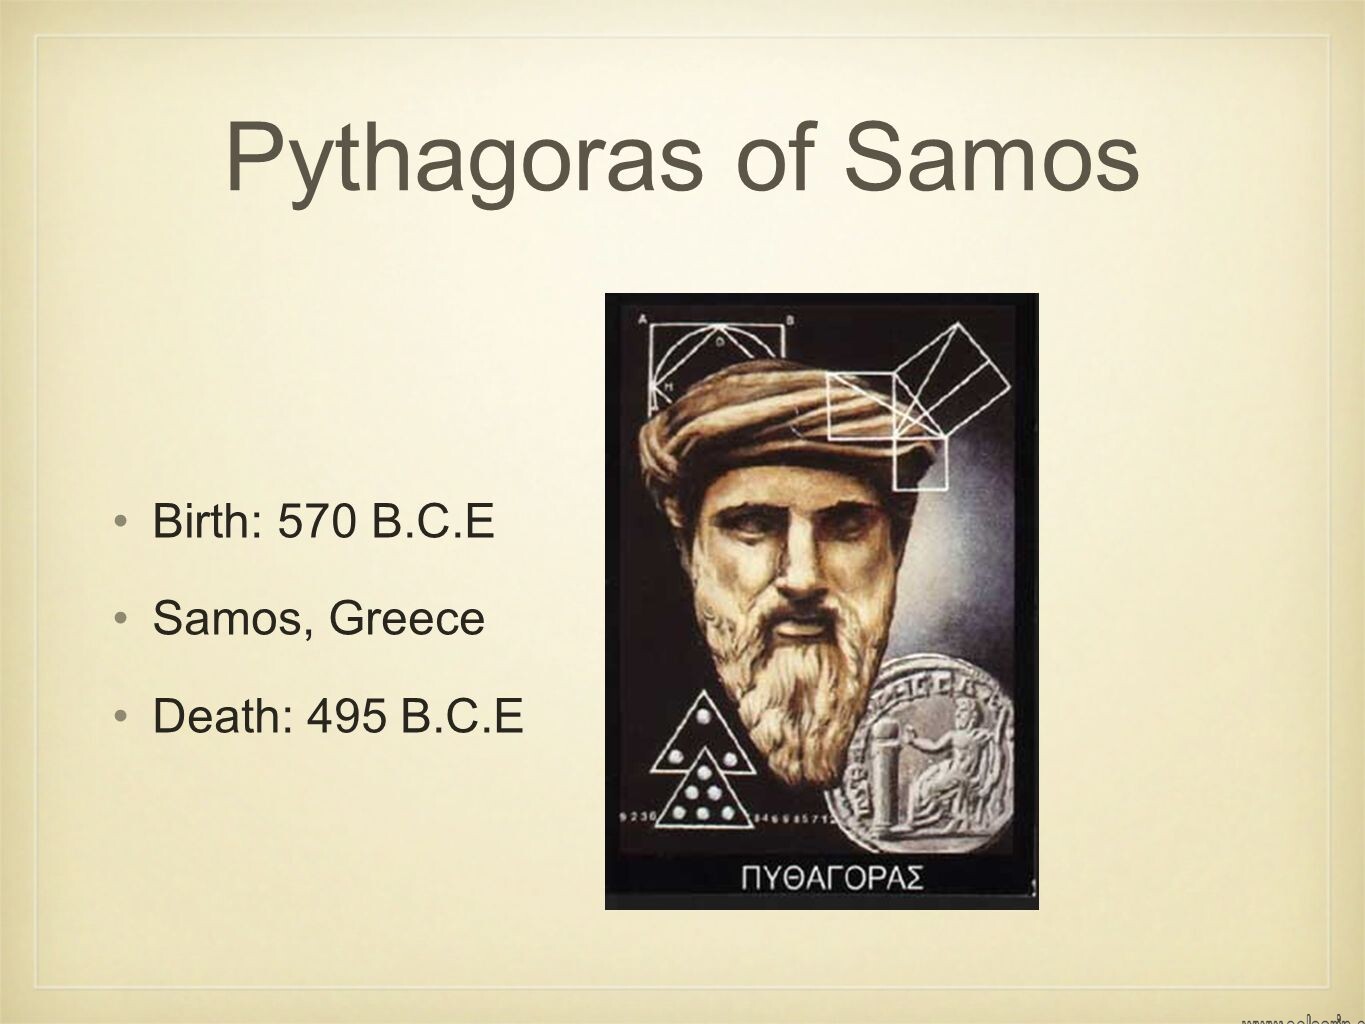 what year was pythagoras born?